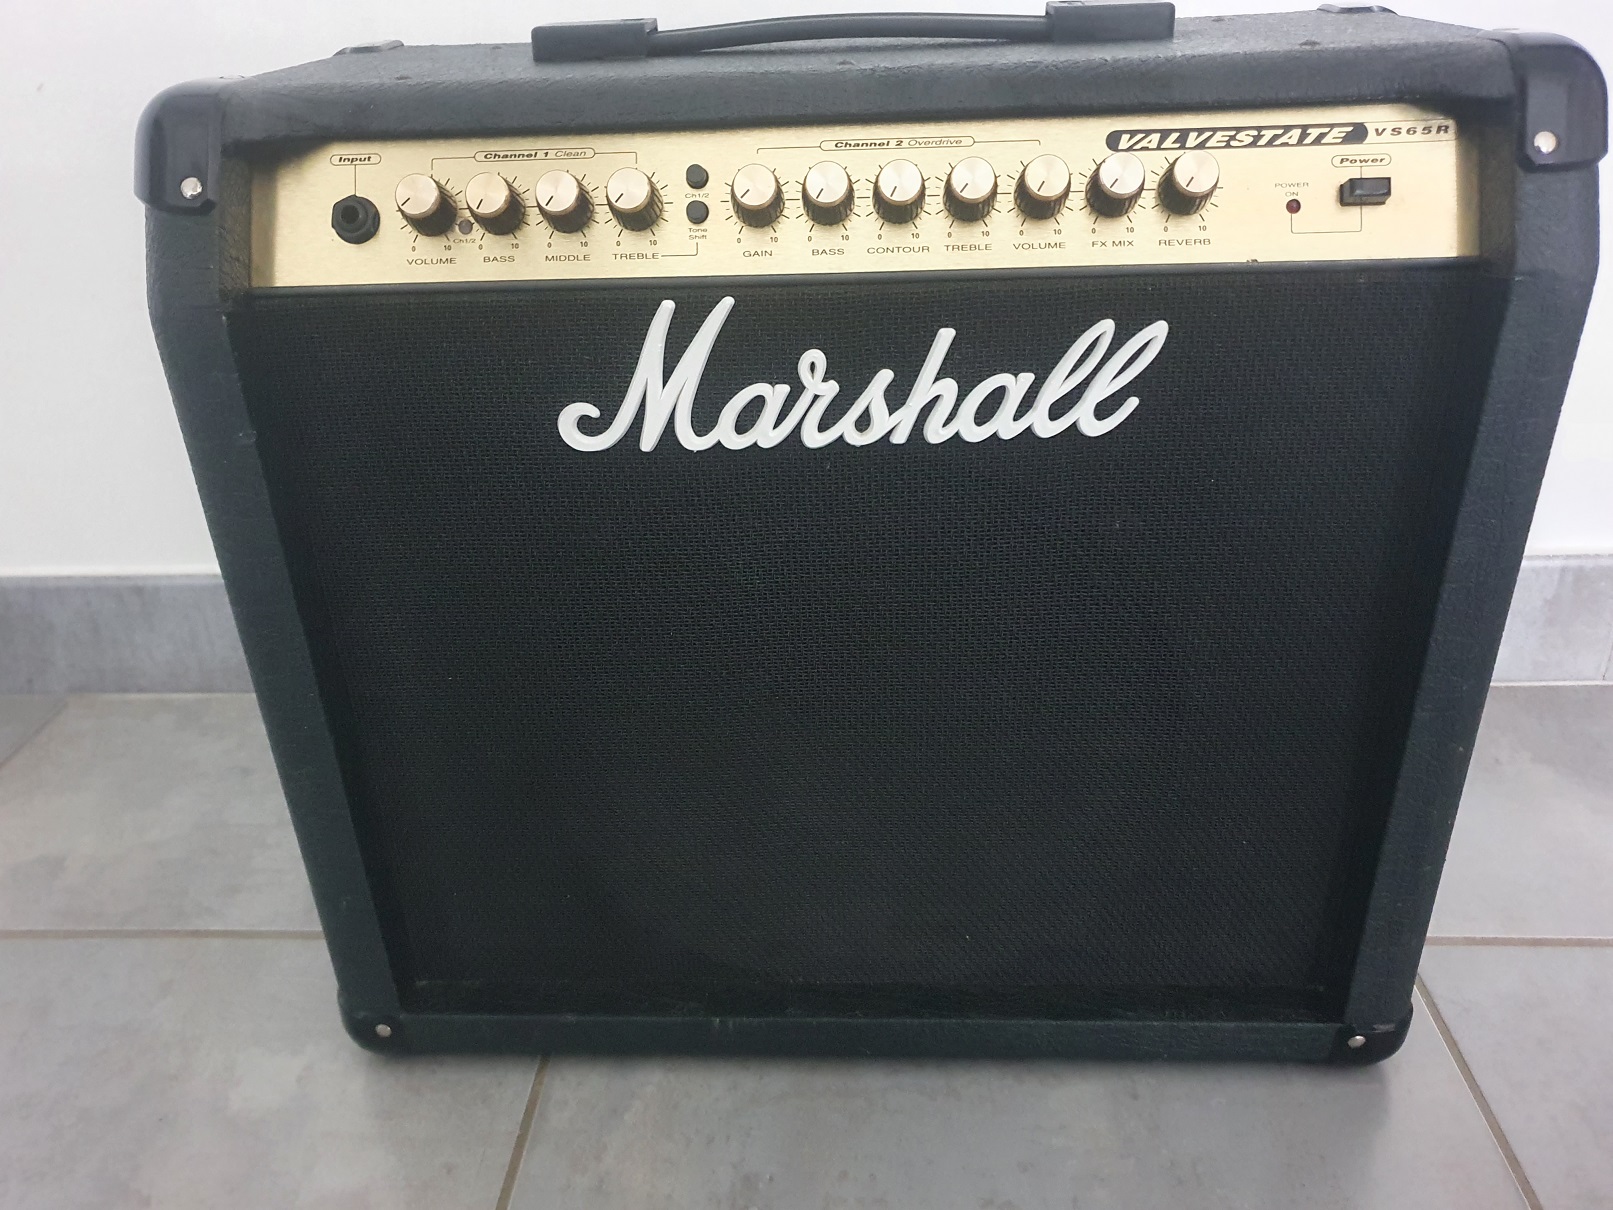 VS65R - Marshall VS65R - Audiofanzine